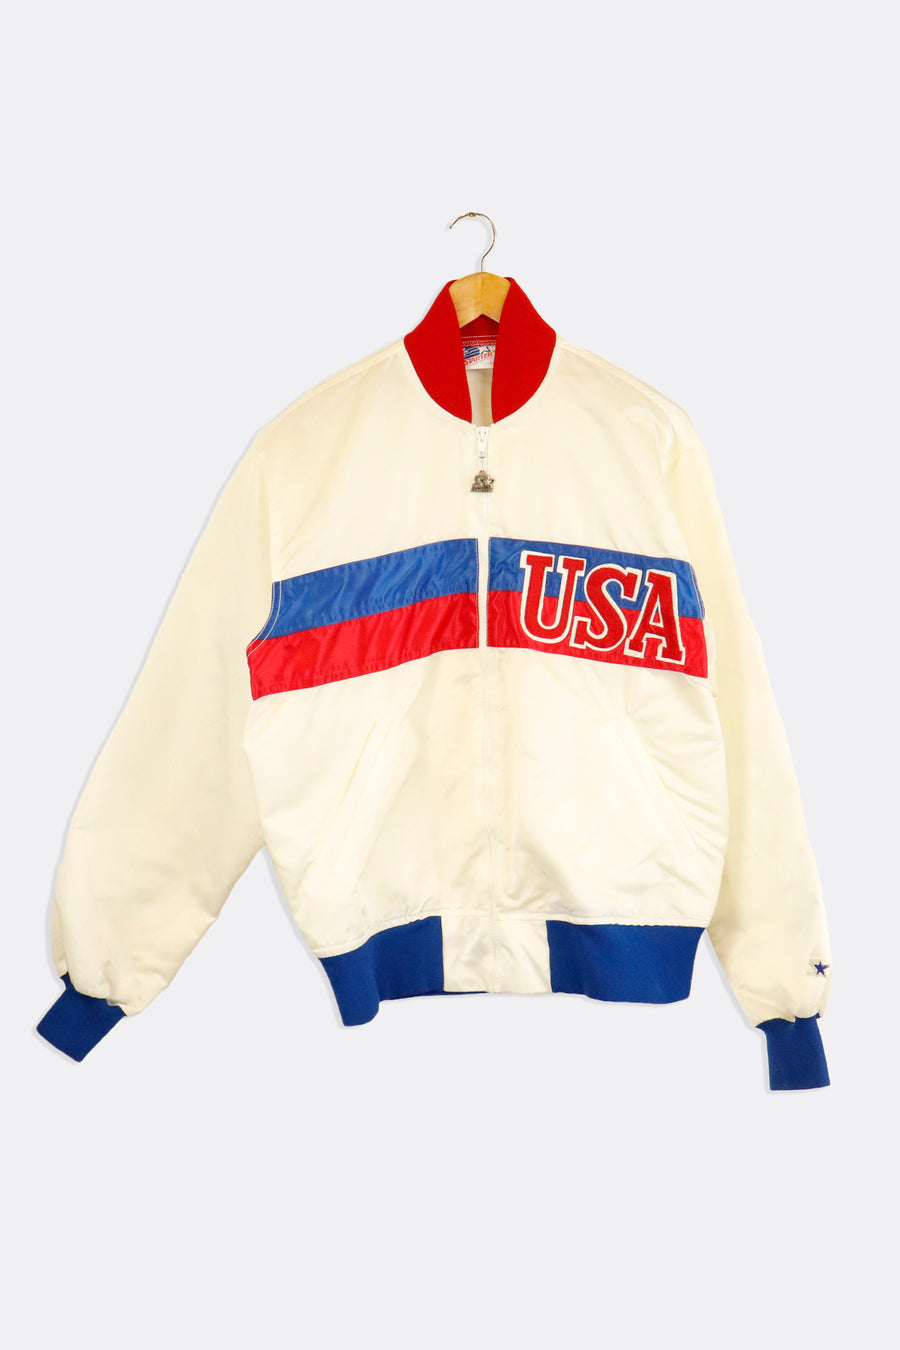 Vintage Starter USA Bomber Jacket Red And Blue Stripe Outerwear Sz XL